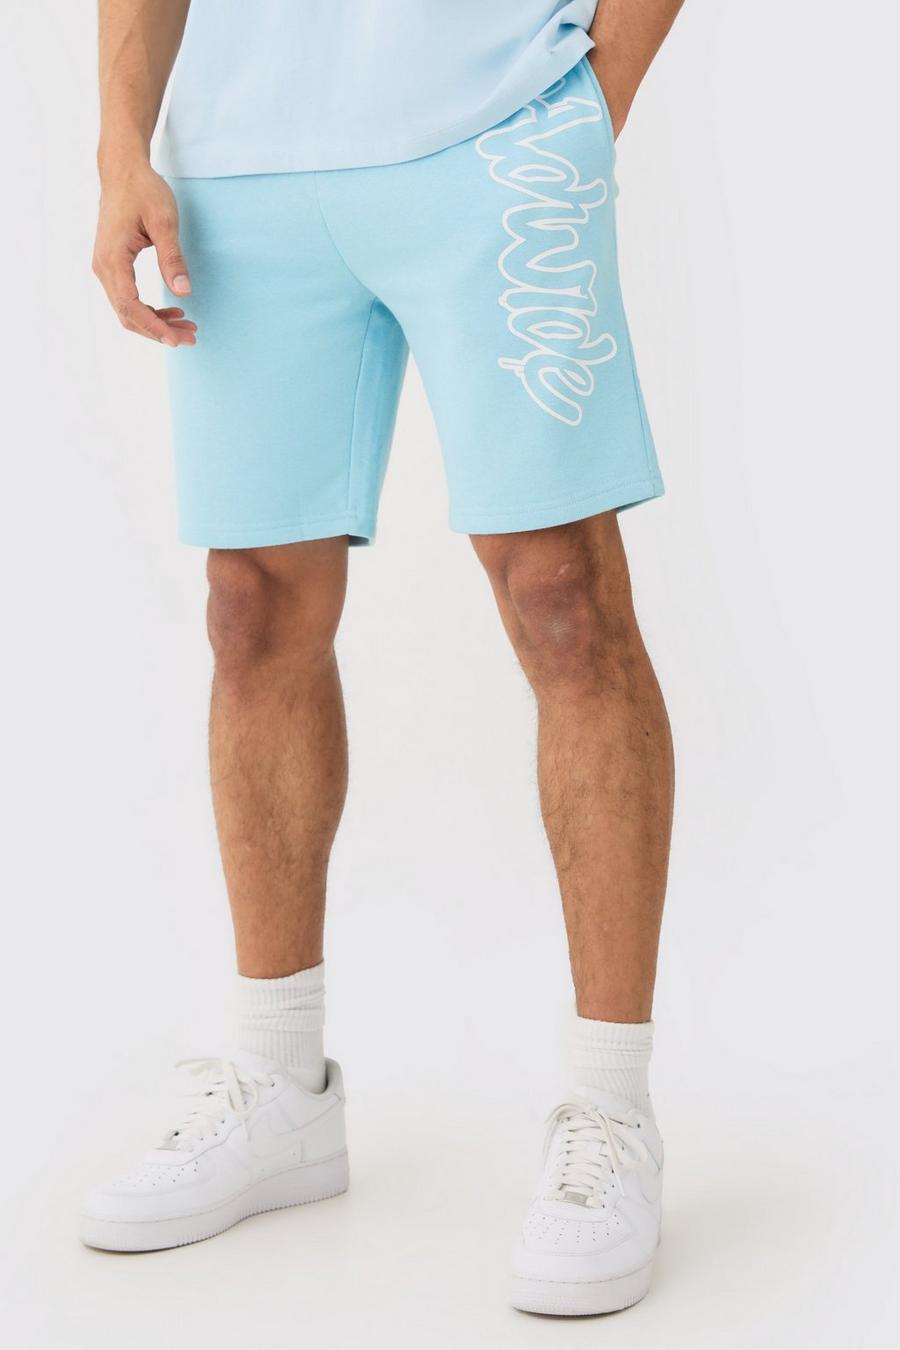 Lockere Shorts mit Worldwide-Print, Light blue image number 1